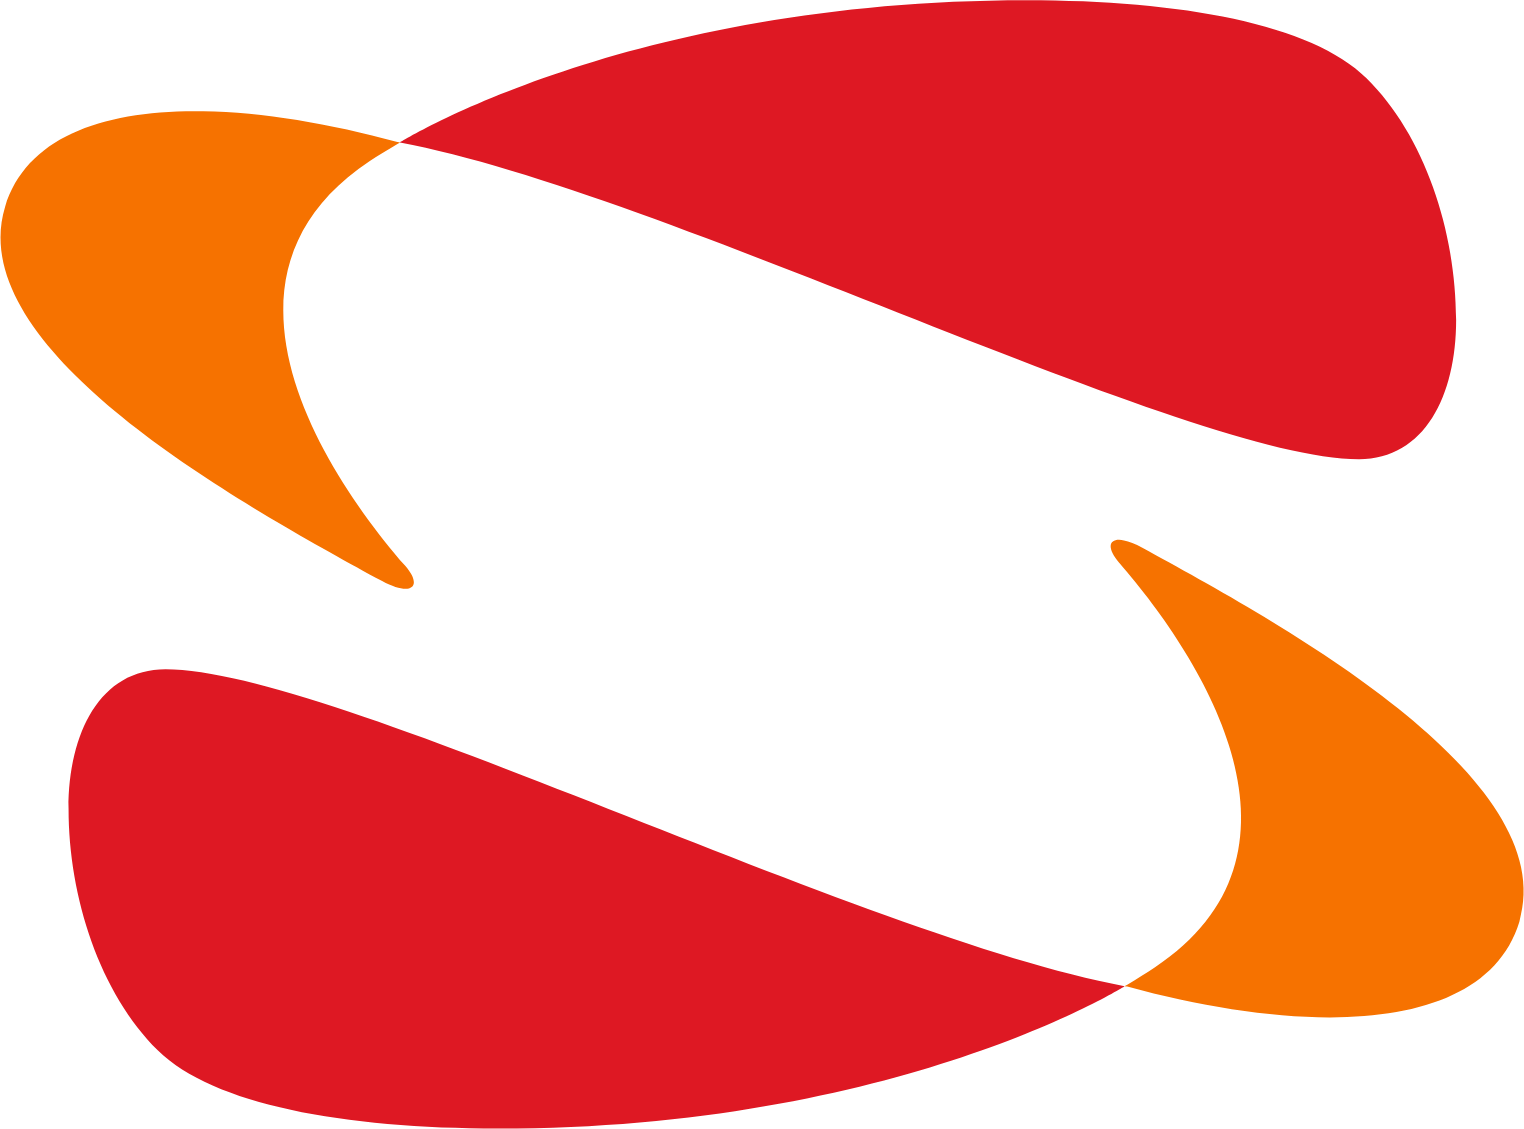 Sopra Steria Group logo (PNG transparent)